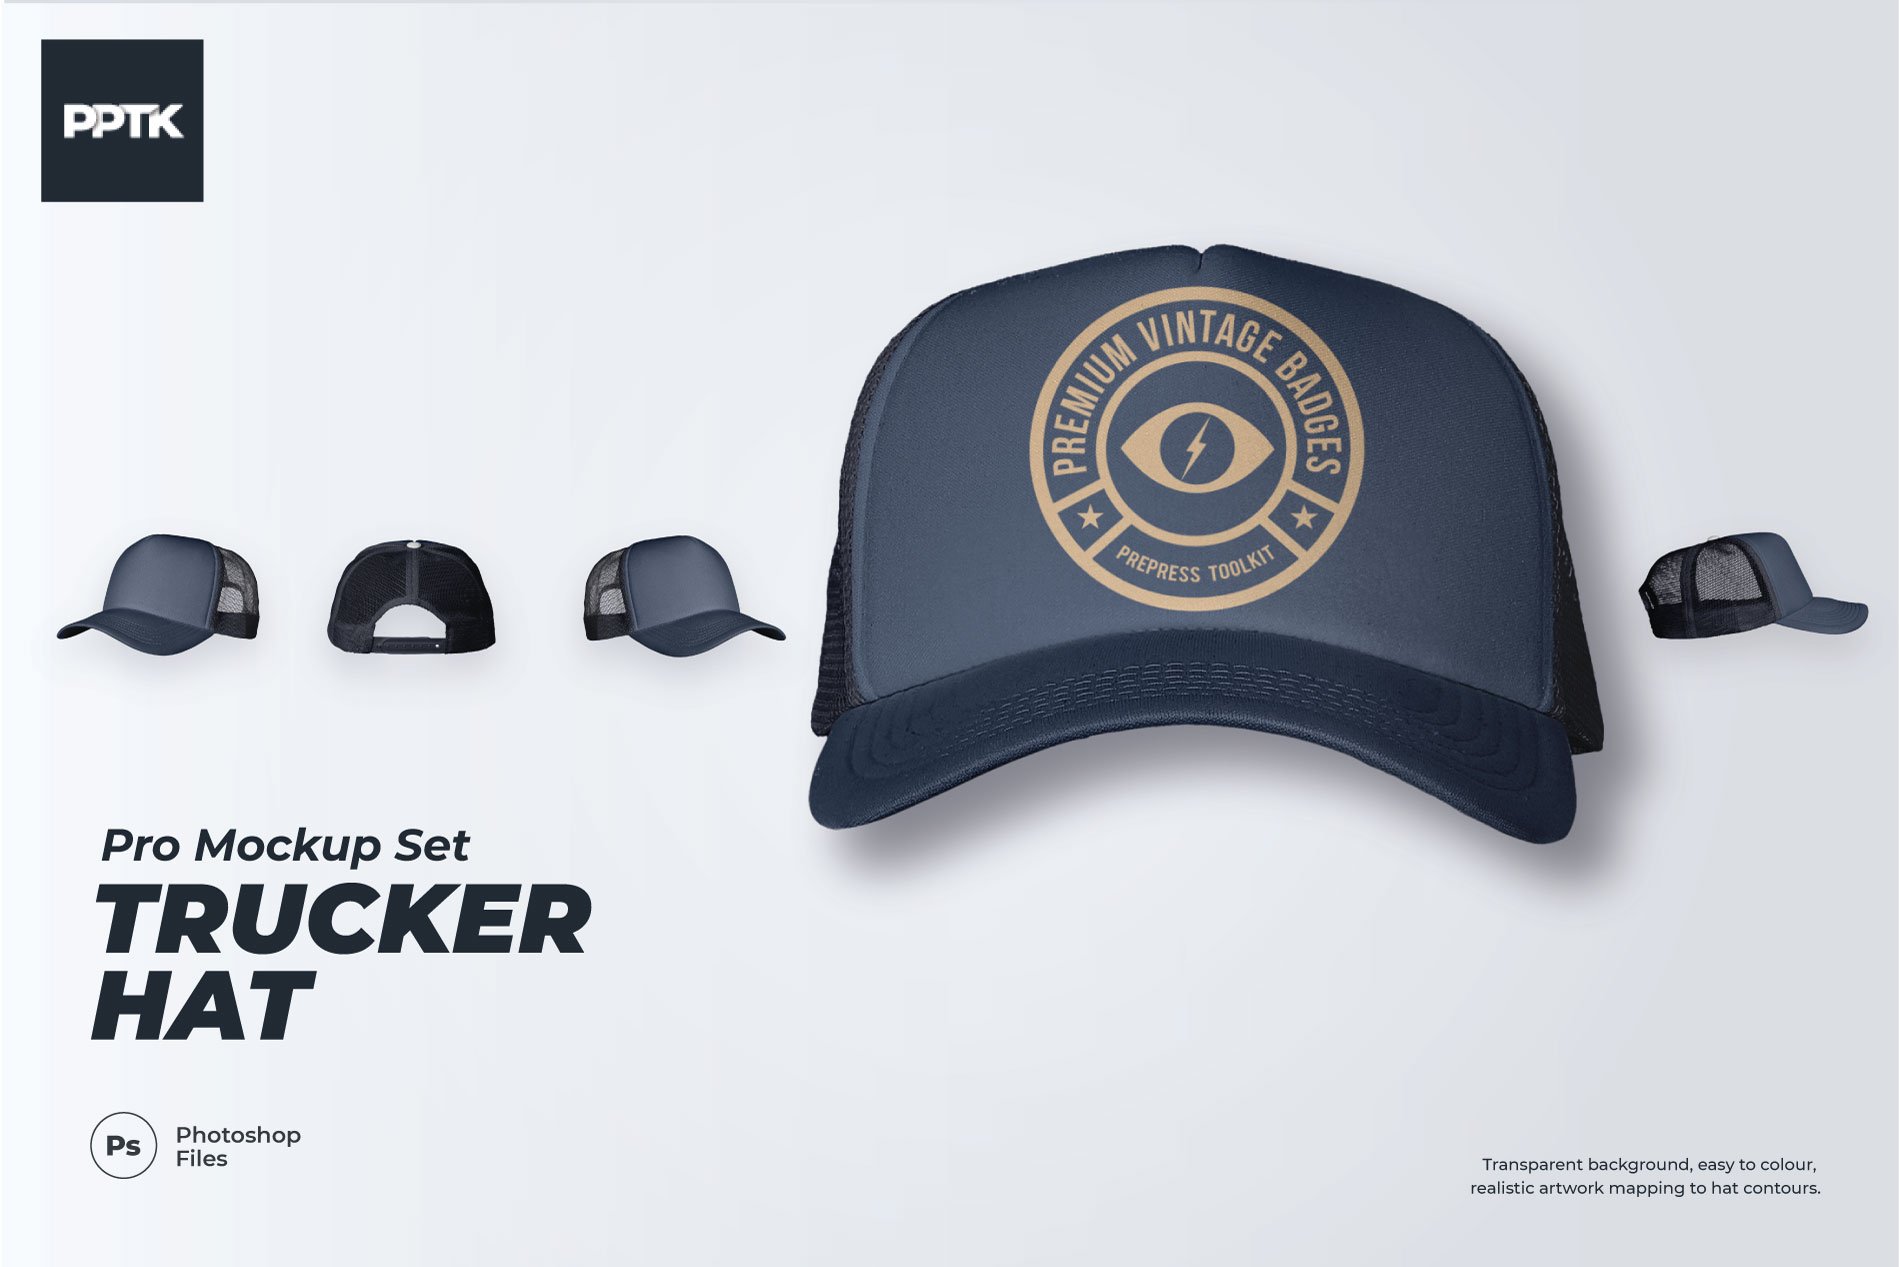 Trucker Hat Mockup cover image.